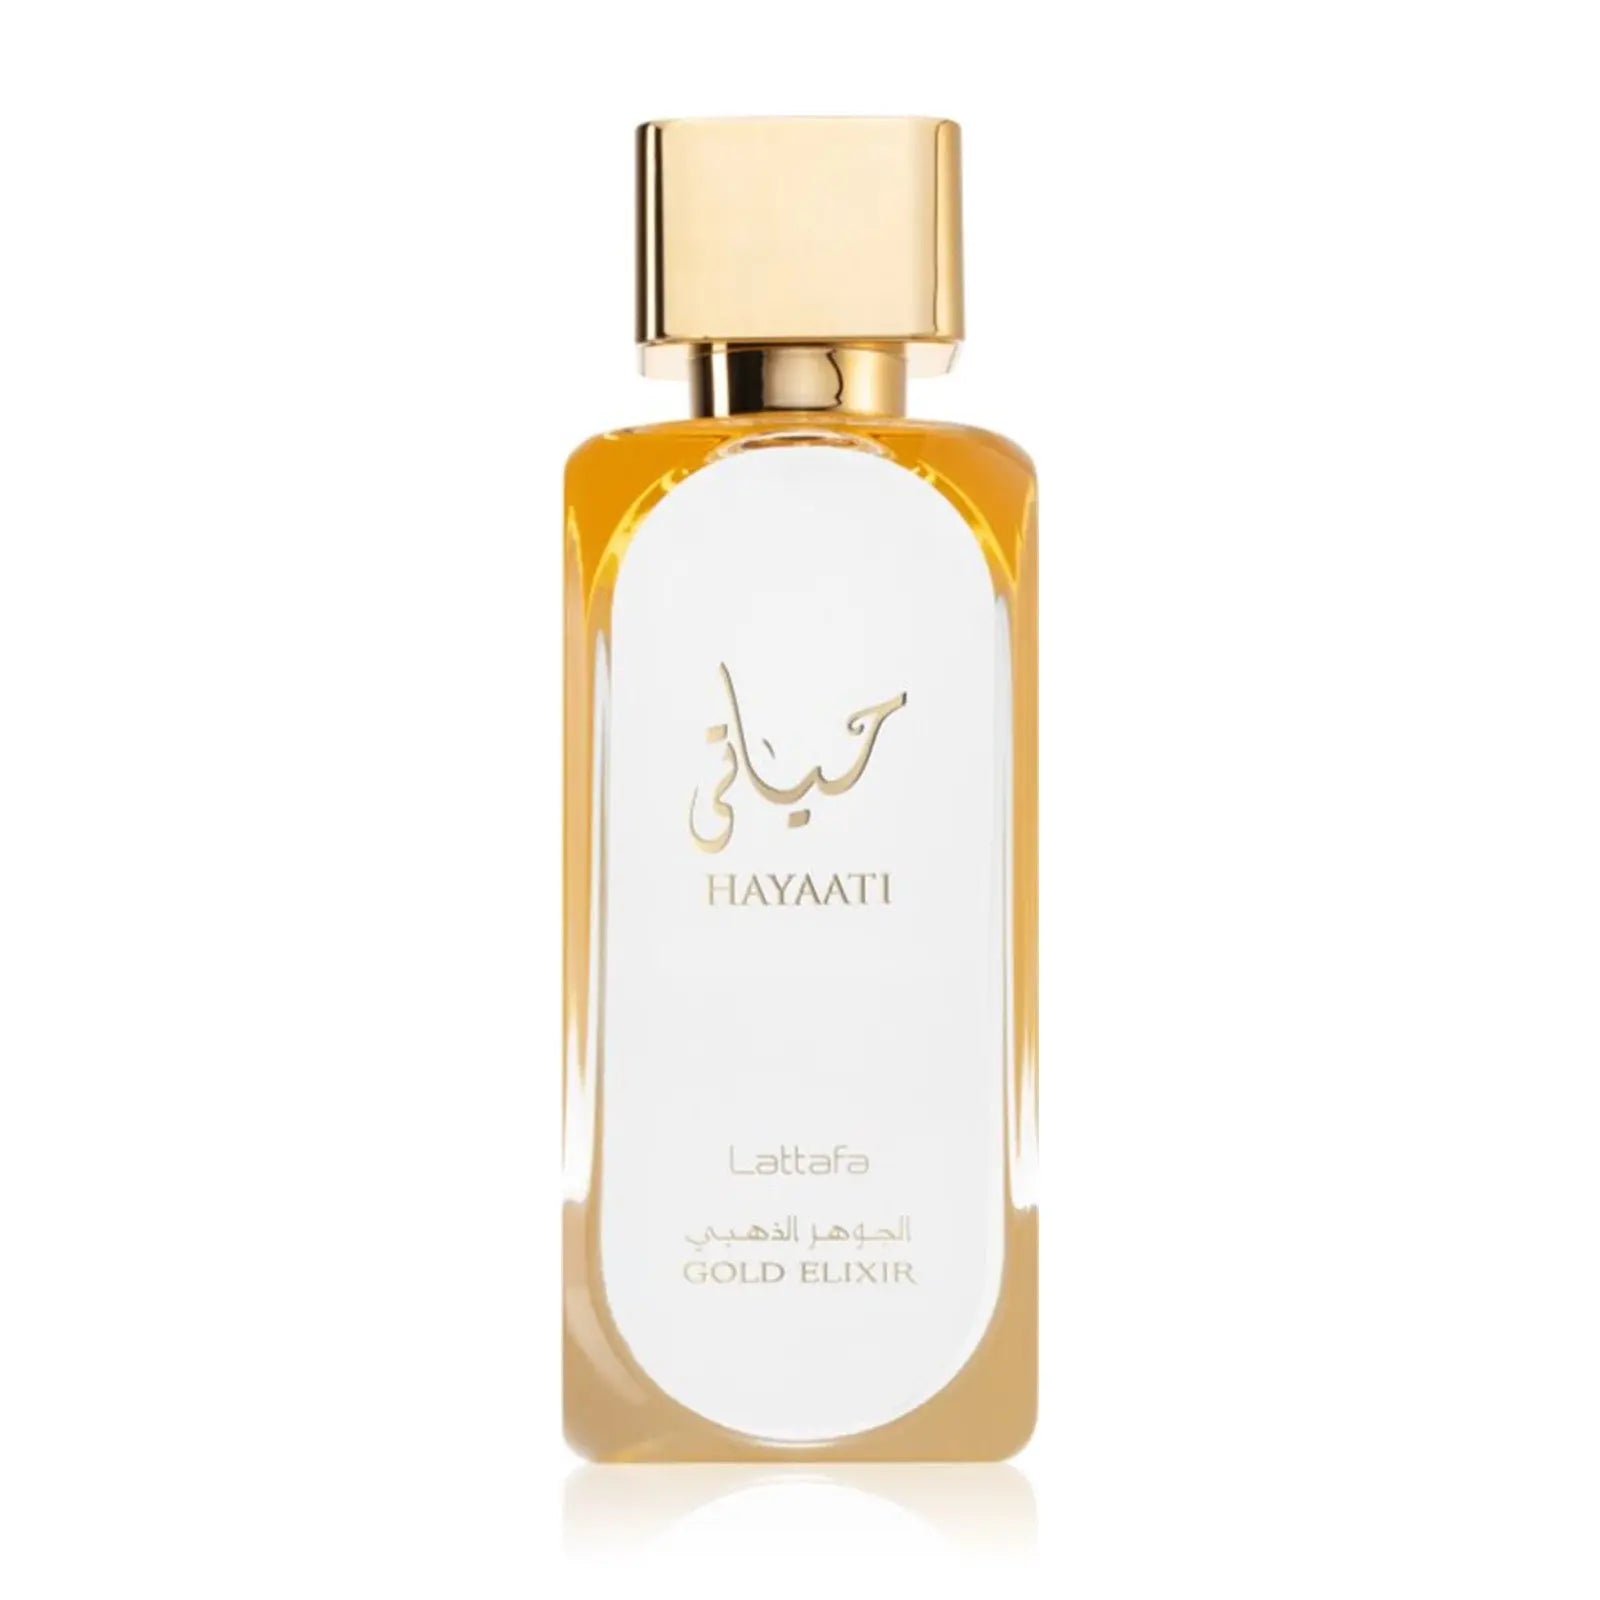 Hayaati Gold Elixir Perfume 100ml EDP Lattafa